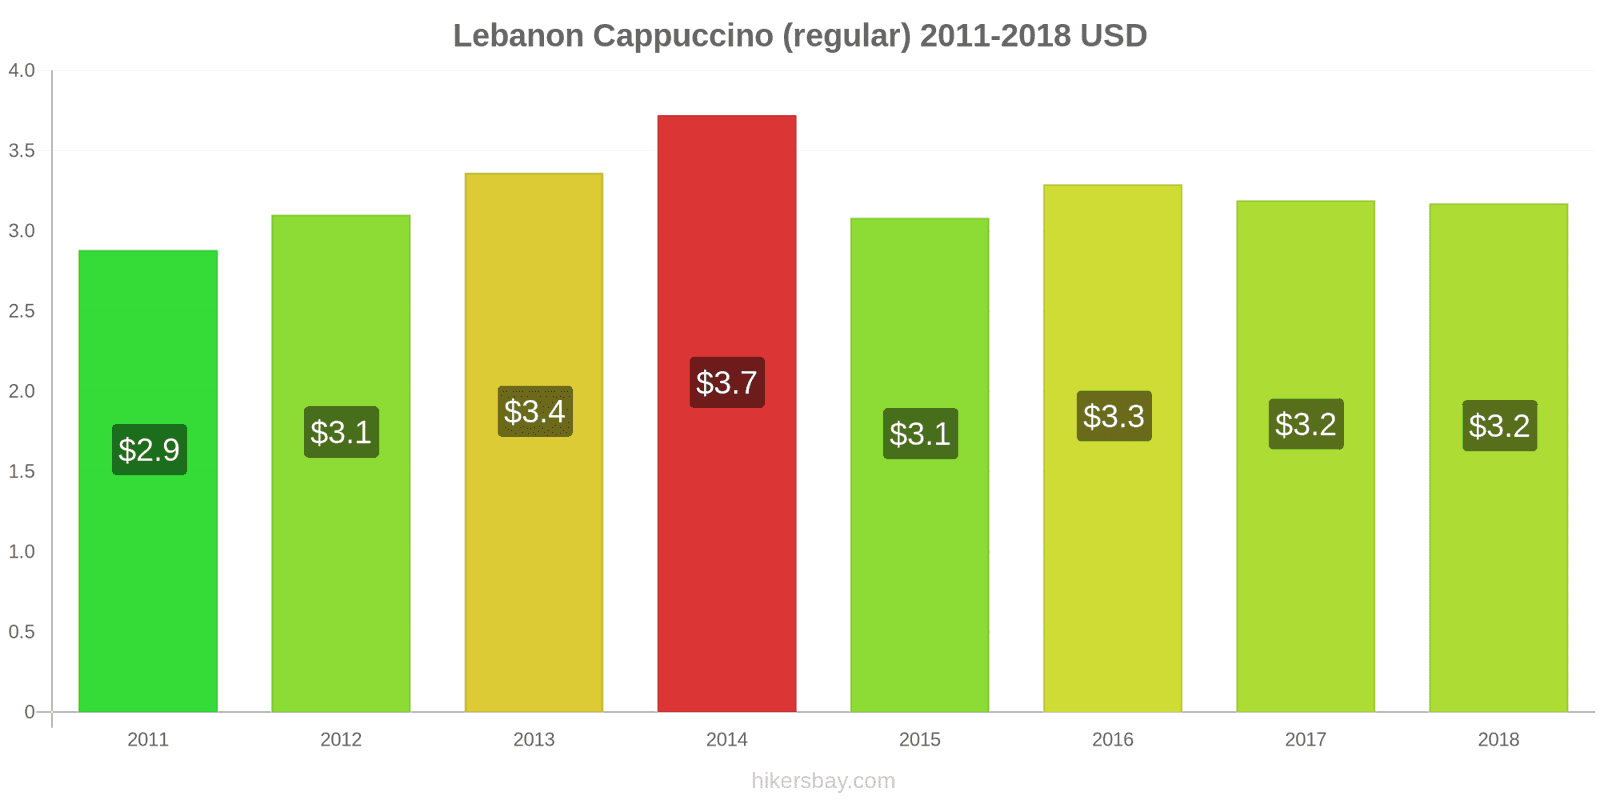 Lebanon price changes Cappuccino hikersbay.com